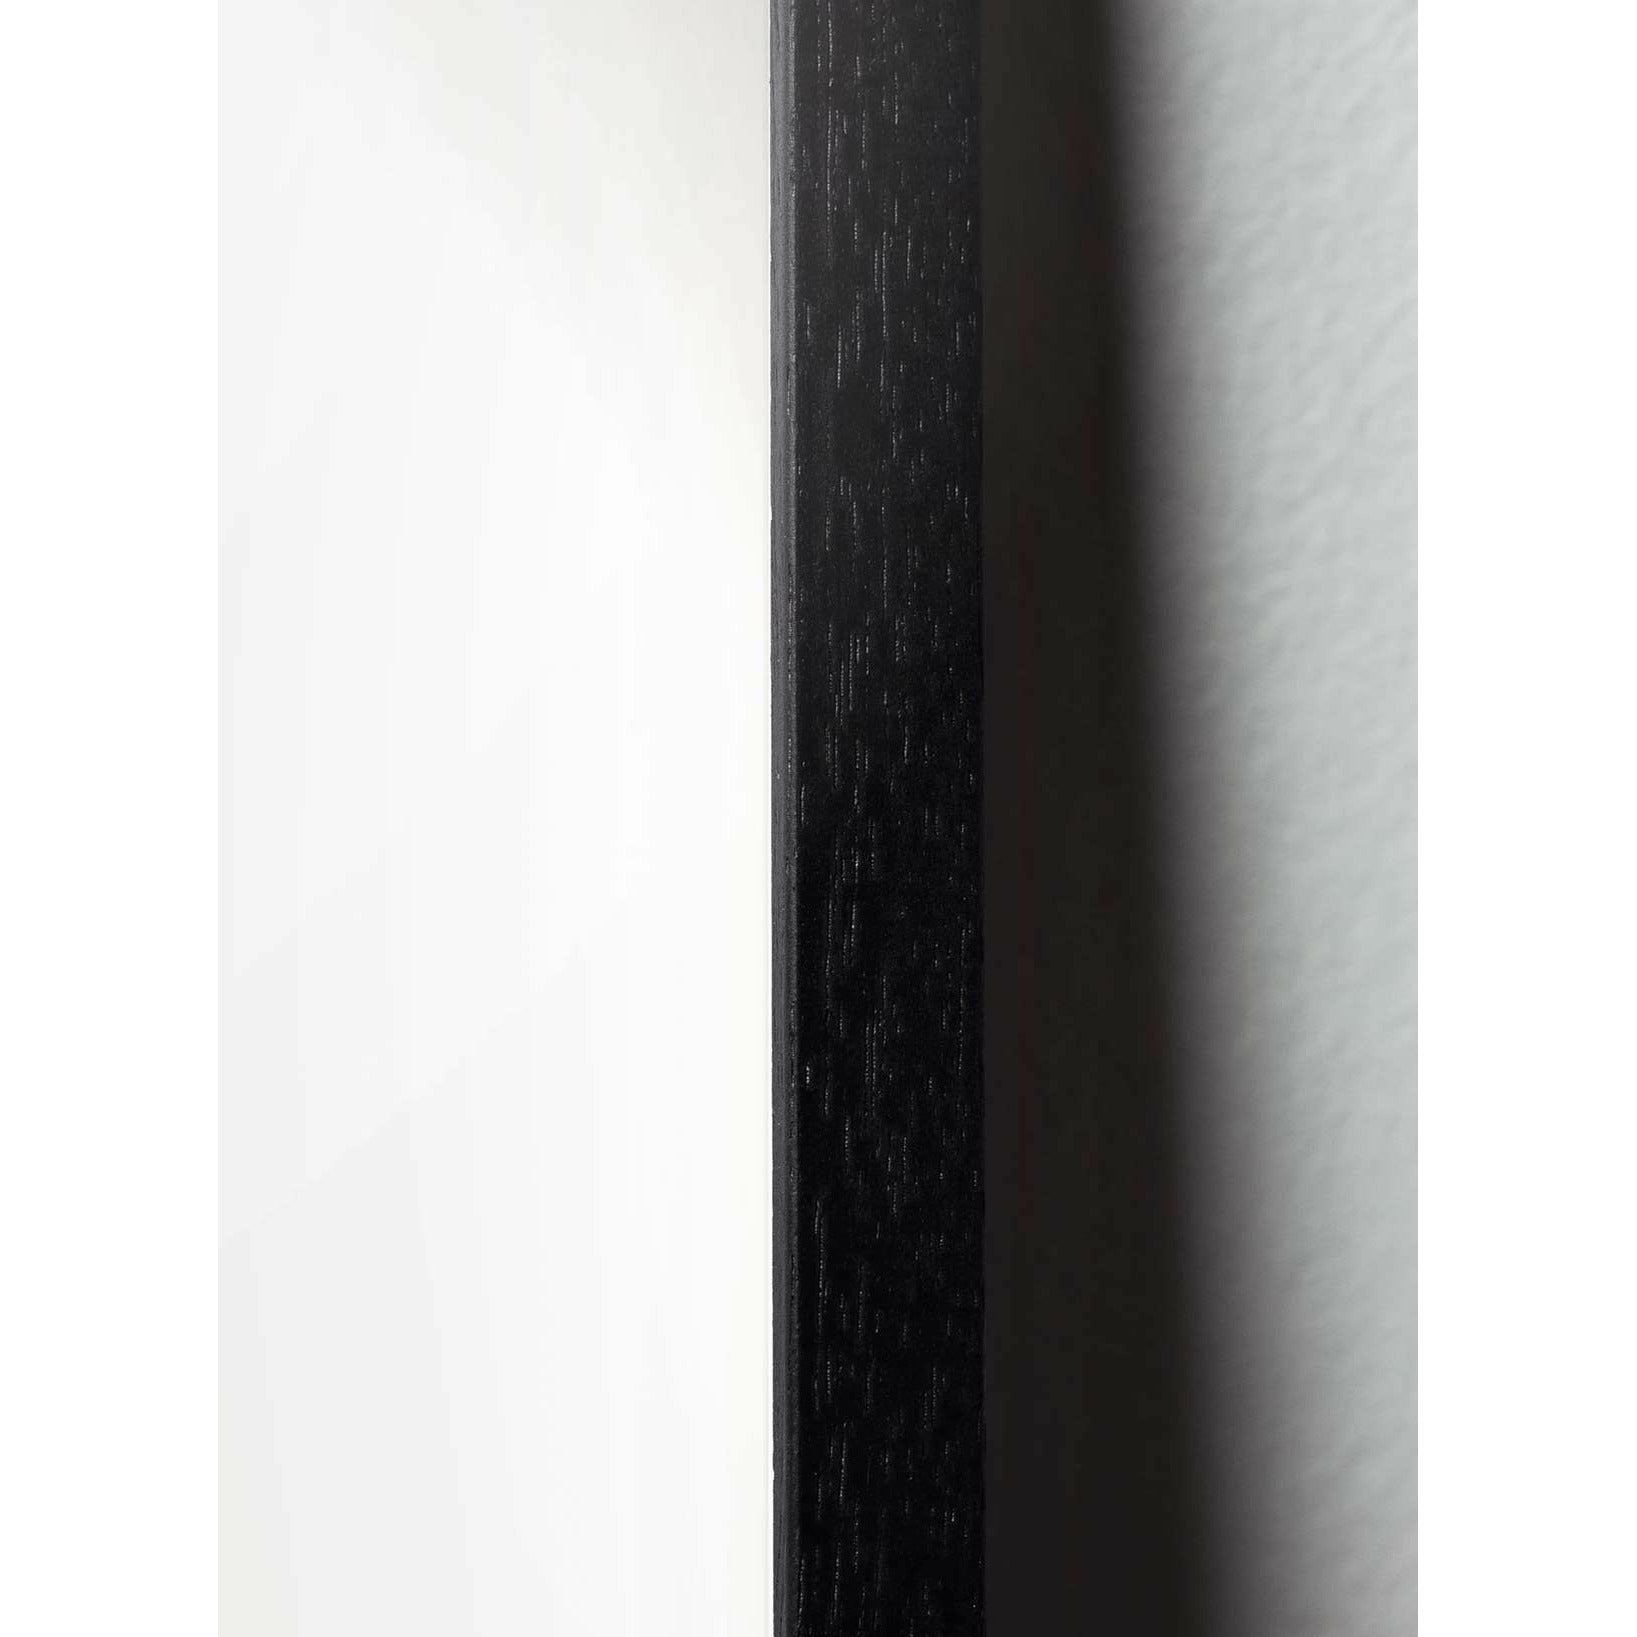 Brainchild Vinter bra klassisk affisch, ram i svart -målat trä 30x40 cm, svart bakgrund